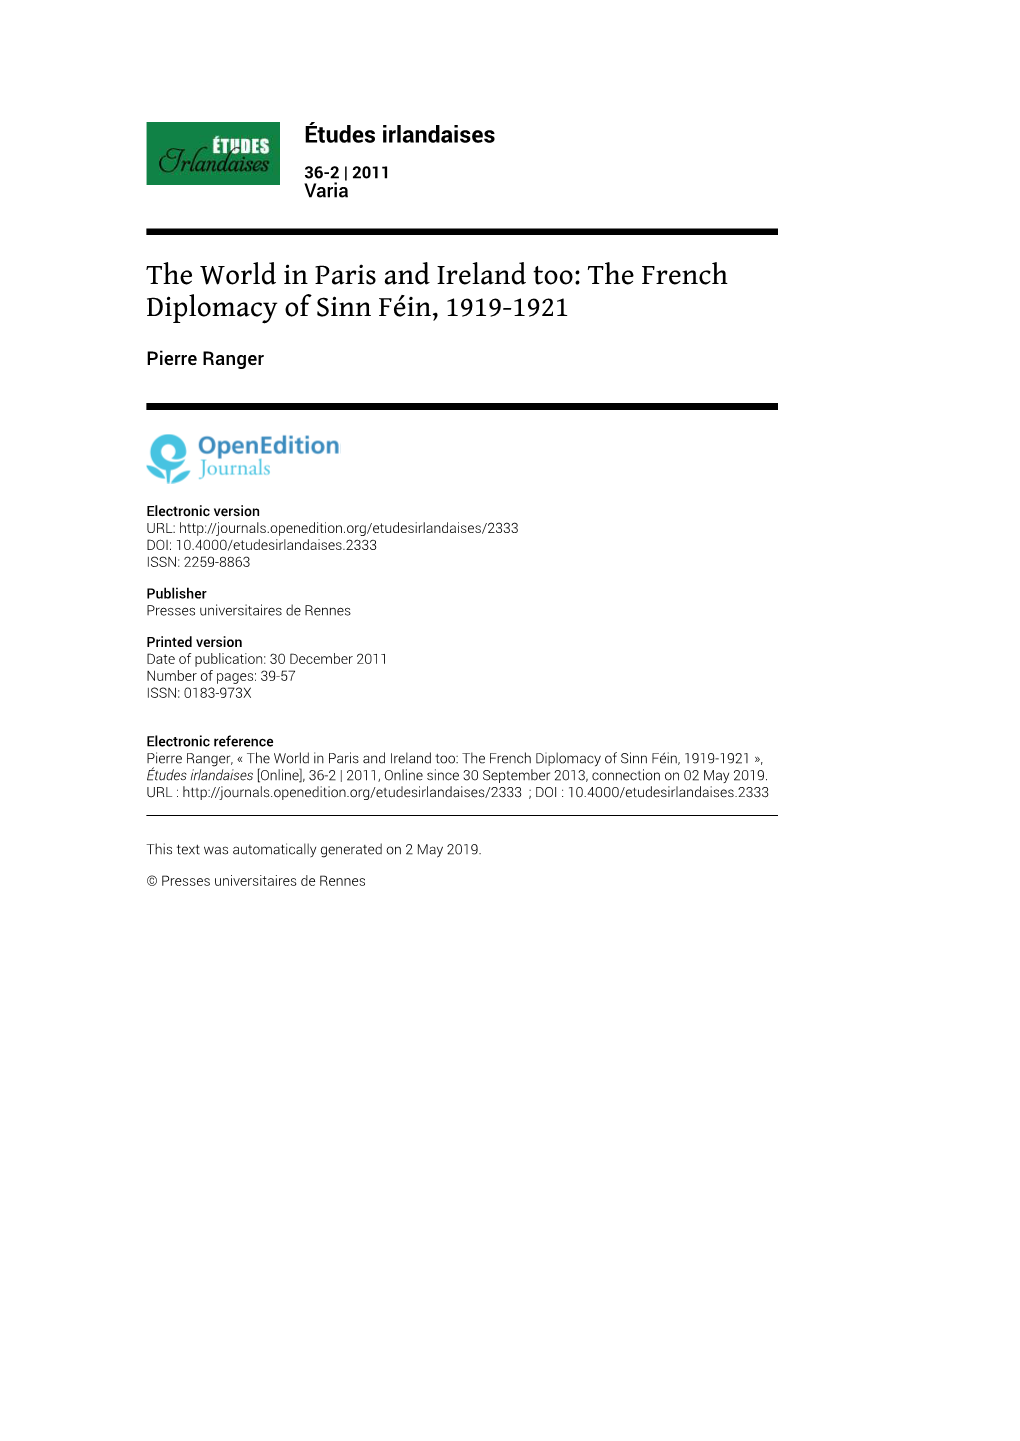 Études Irlandaises, 36-2 | 2011 the World in Paris and Ireland Too: the French Diplomacy of Sinn Féin, 1919-1921 2